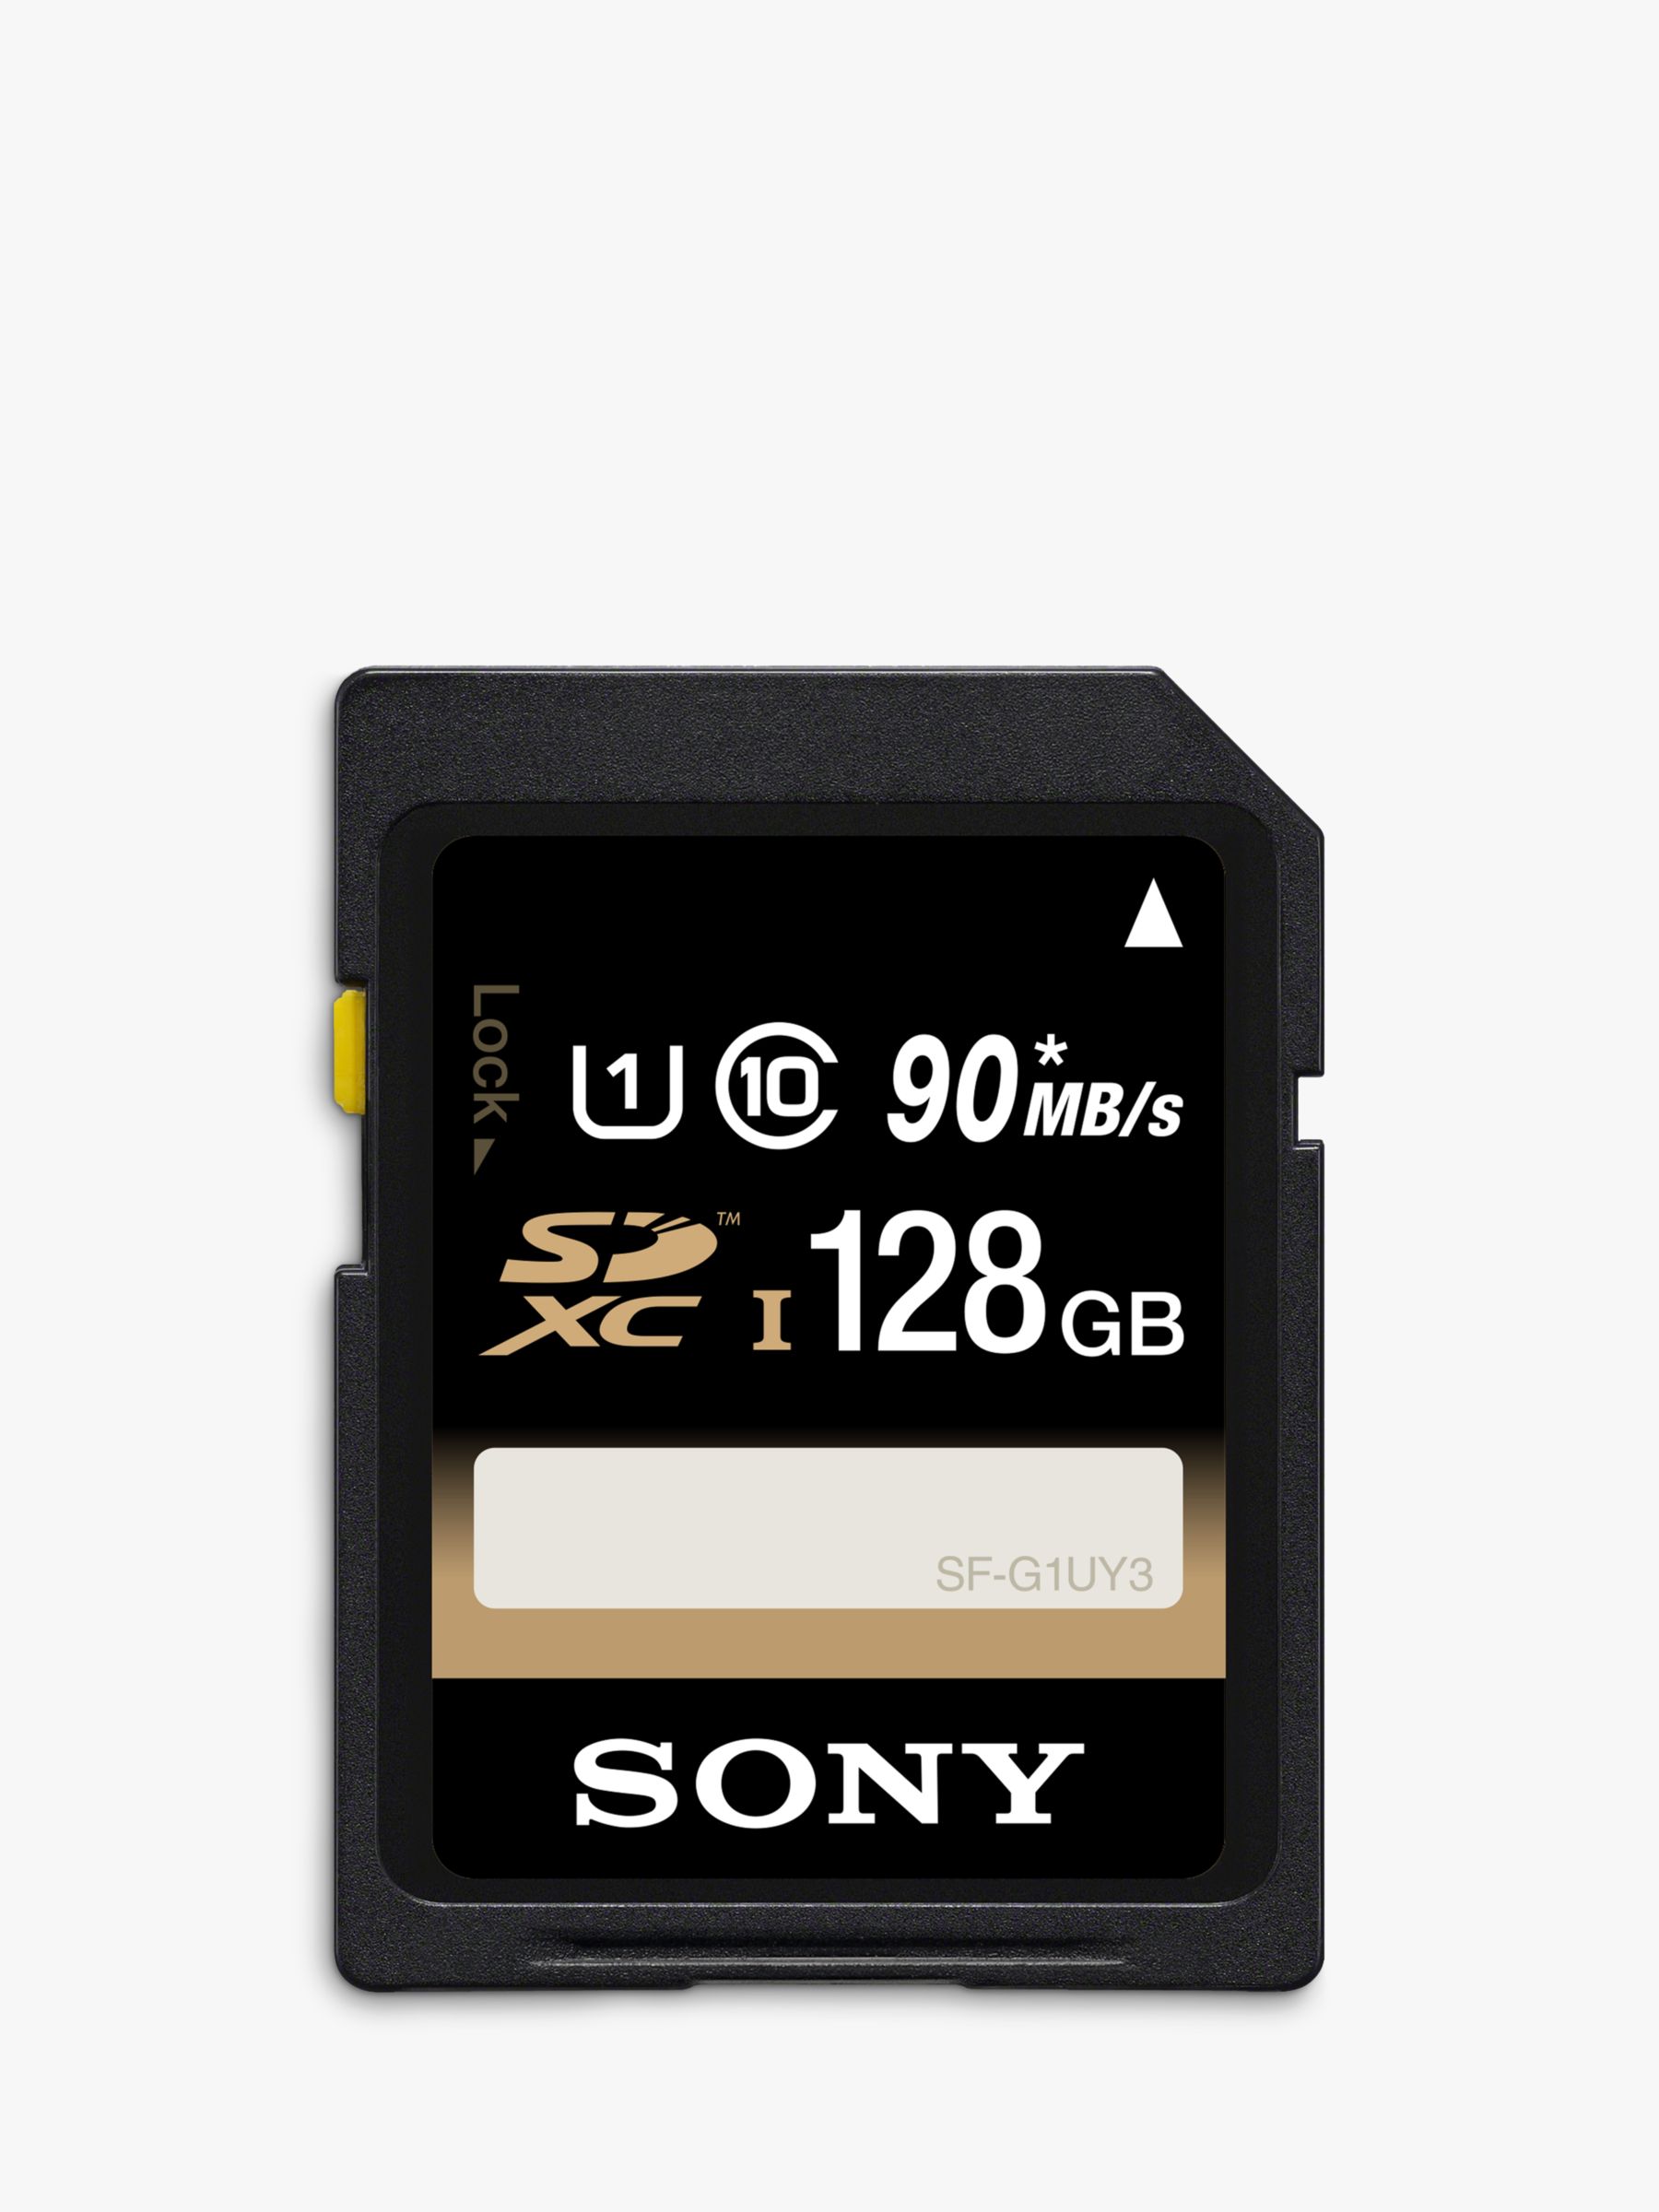 Sony Performance UHS-I Class 10 U1 SD Memory Card, 128GB, 90MB/s Review thumbnail